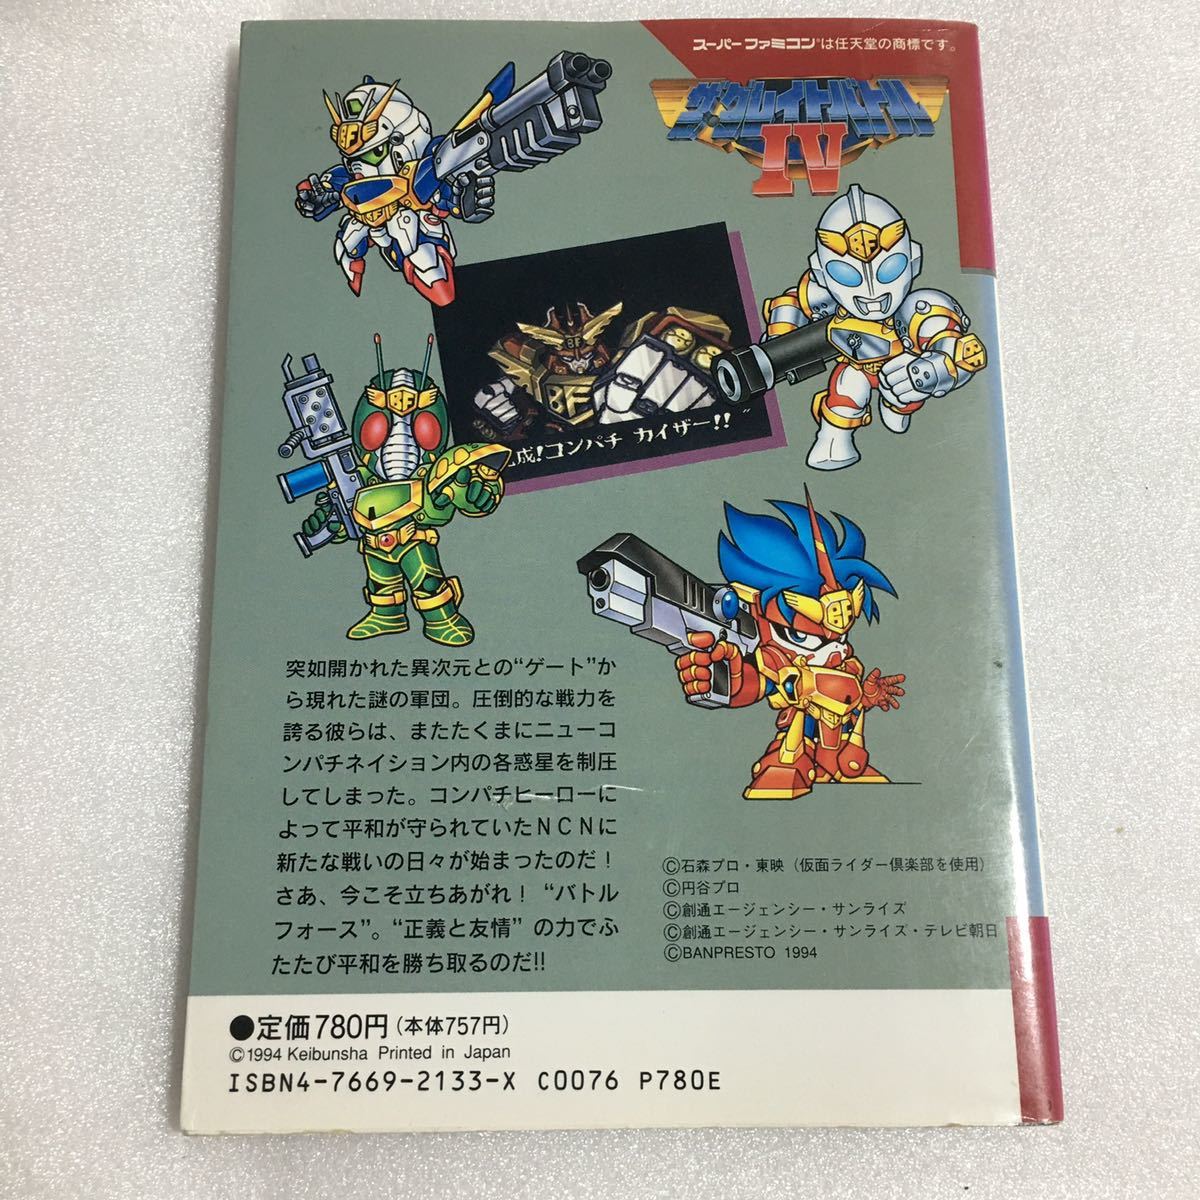 SFC capture book Super Famicom certainly . law special The * grate Battle IV Cave n car 